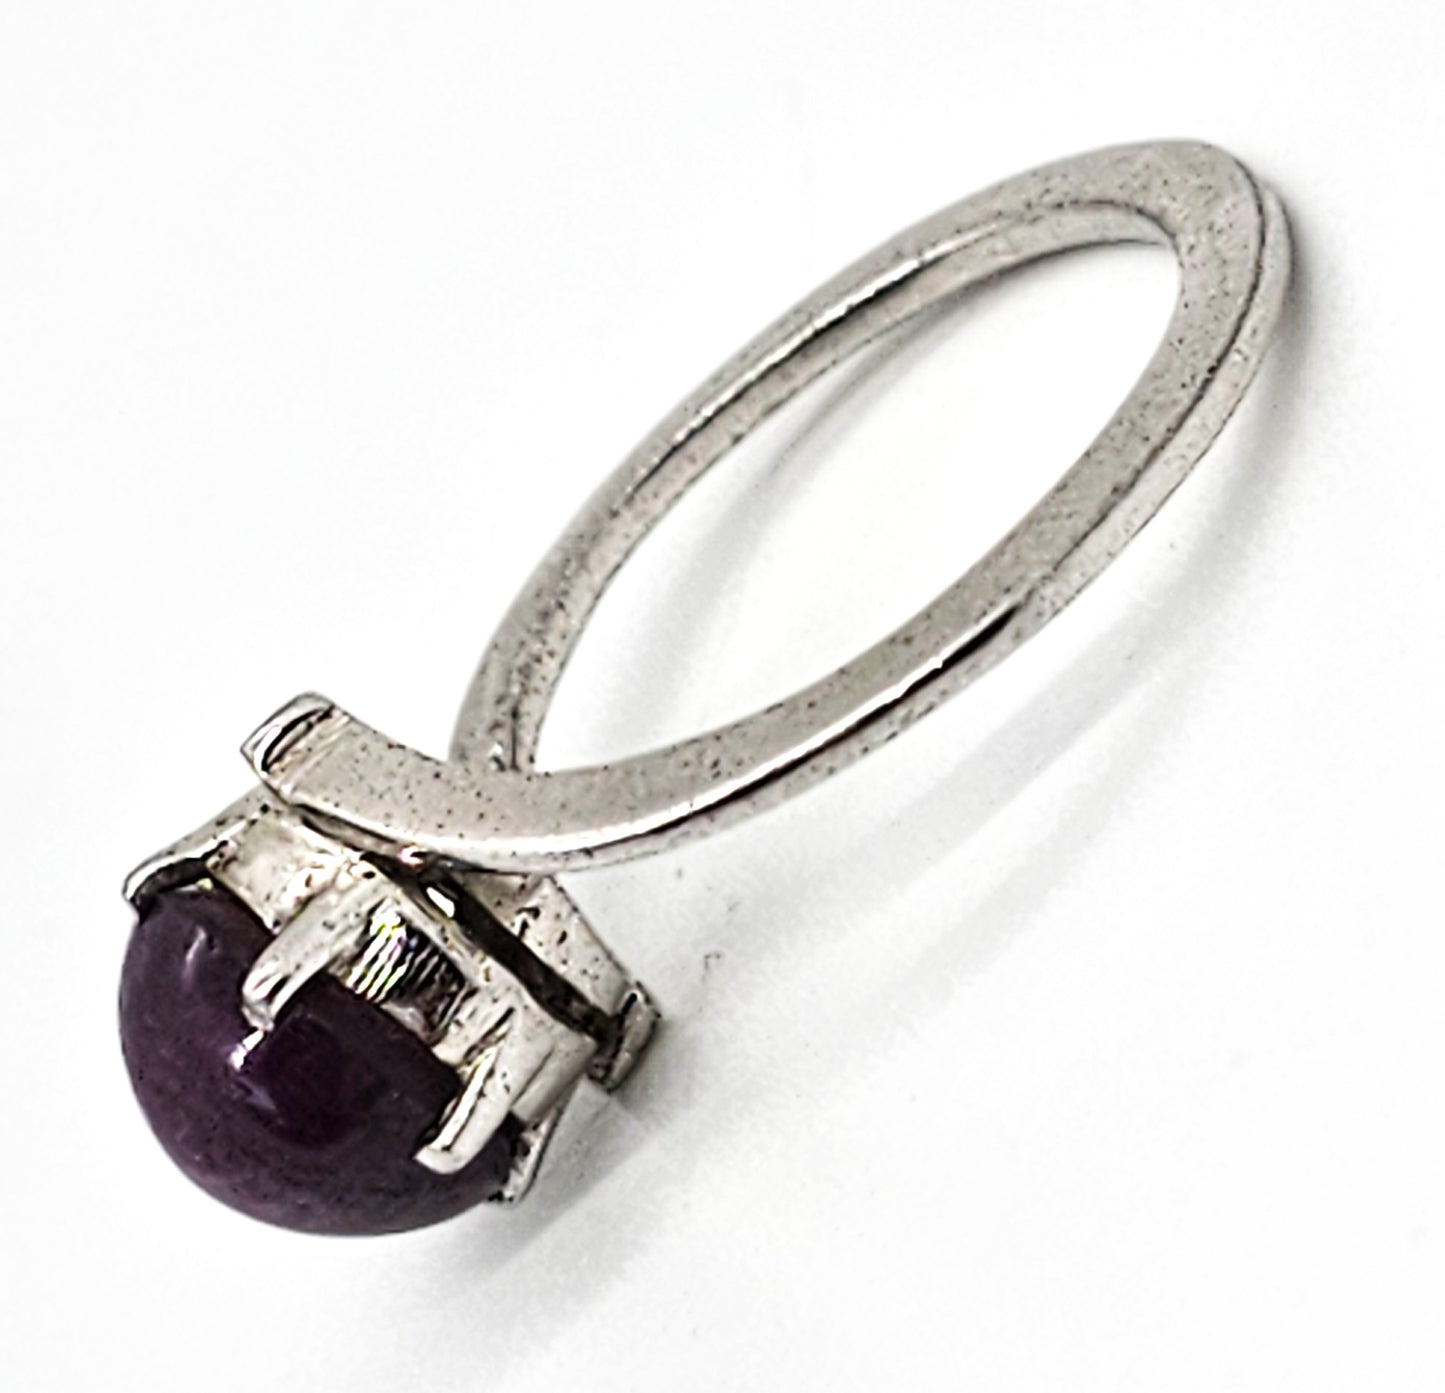 Star Ruby natural gemstone sterling silver modernist ring size 9